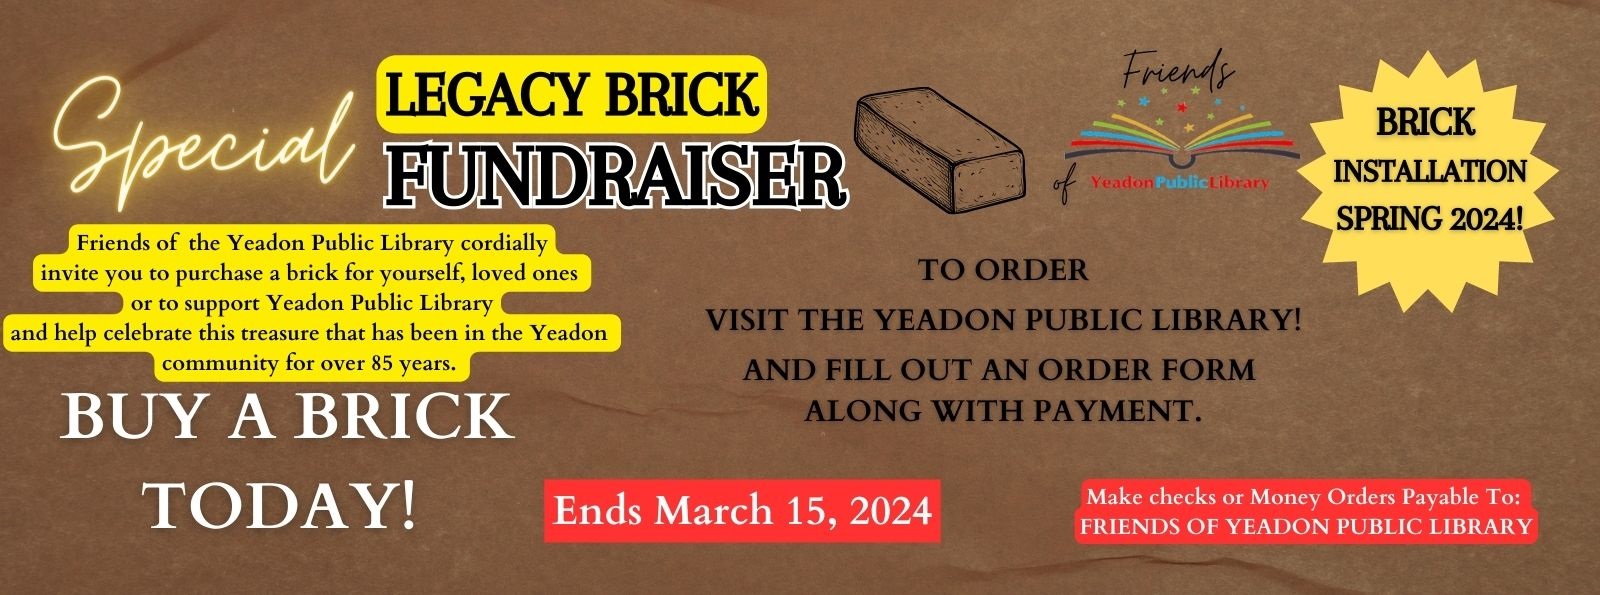 Special Legacy Brick Fundraiser